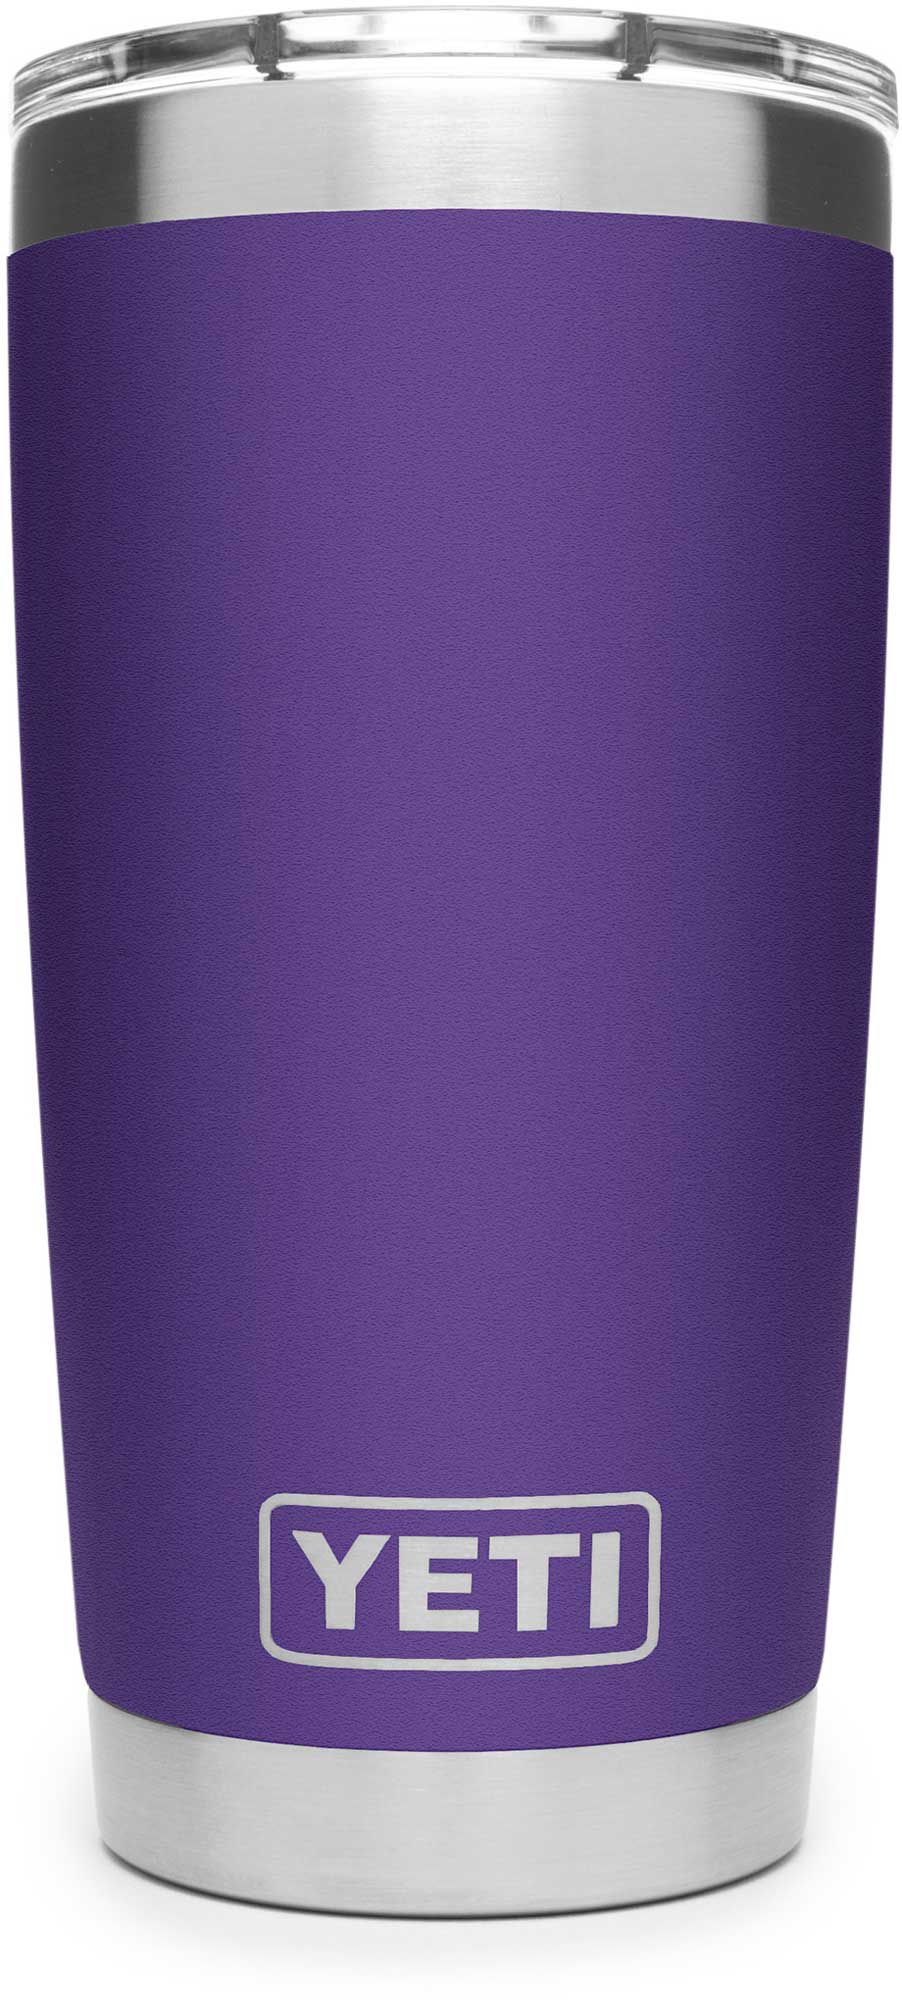 yeti peak purple collection